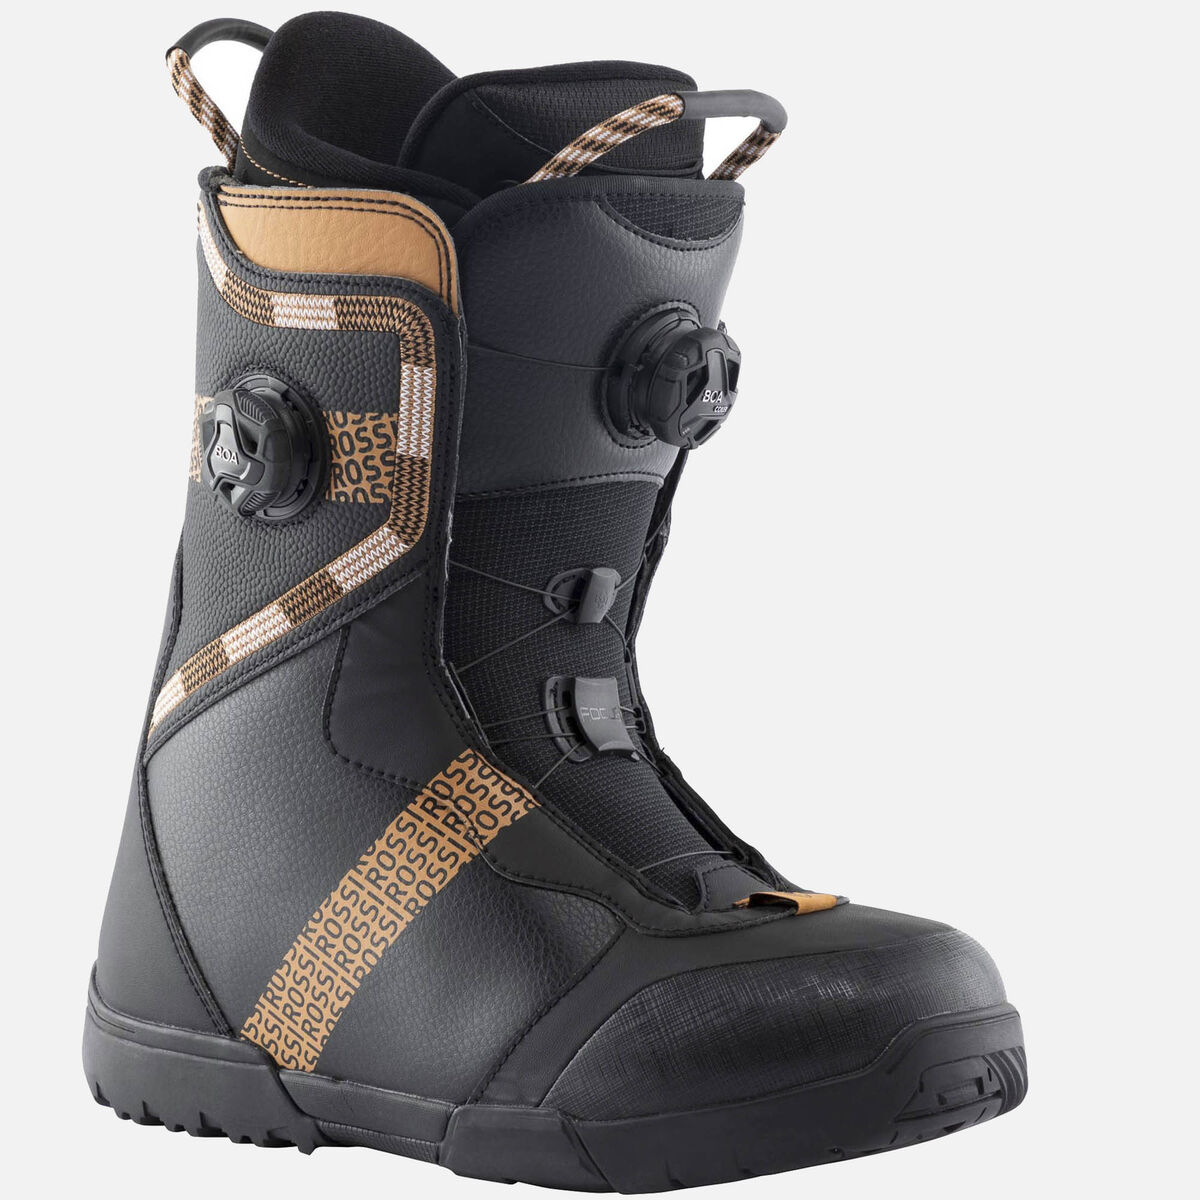 Rossignol - Boots de snowboard Primacy Boa® Focus homme, Hommes